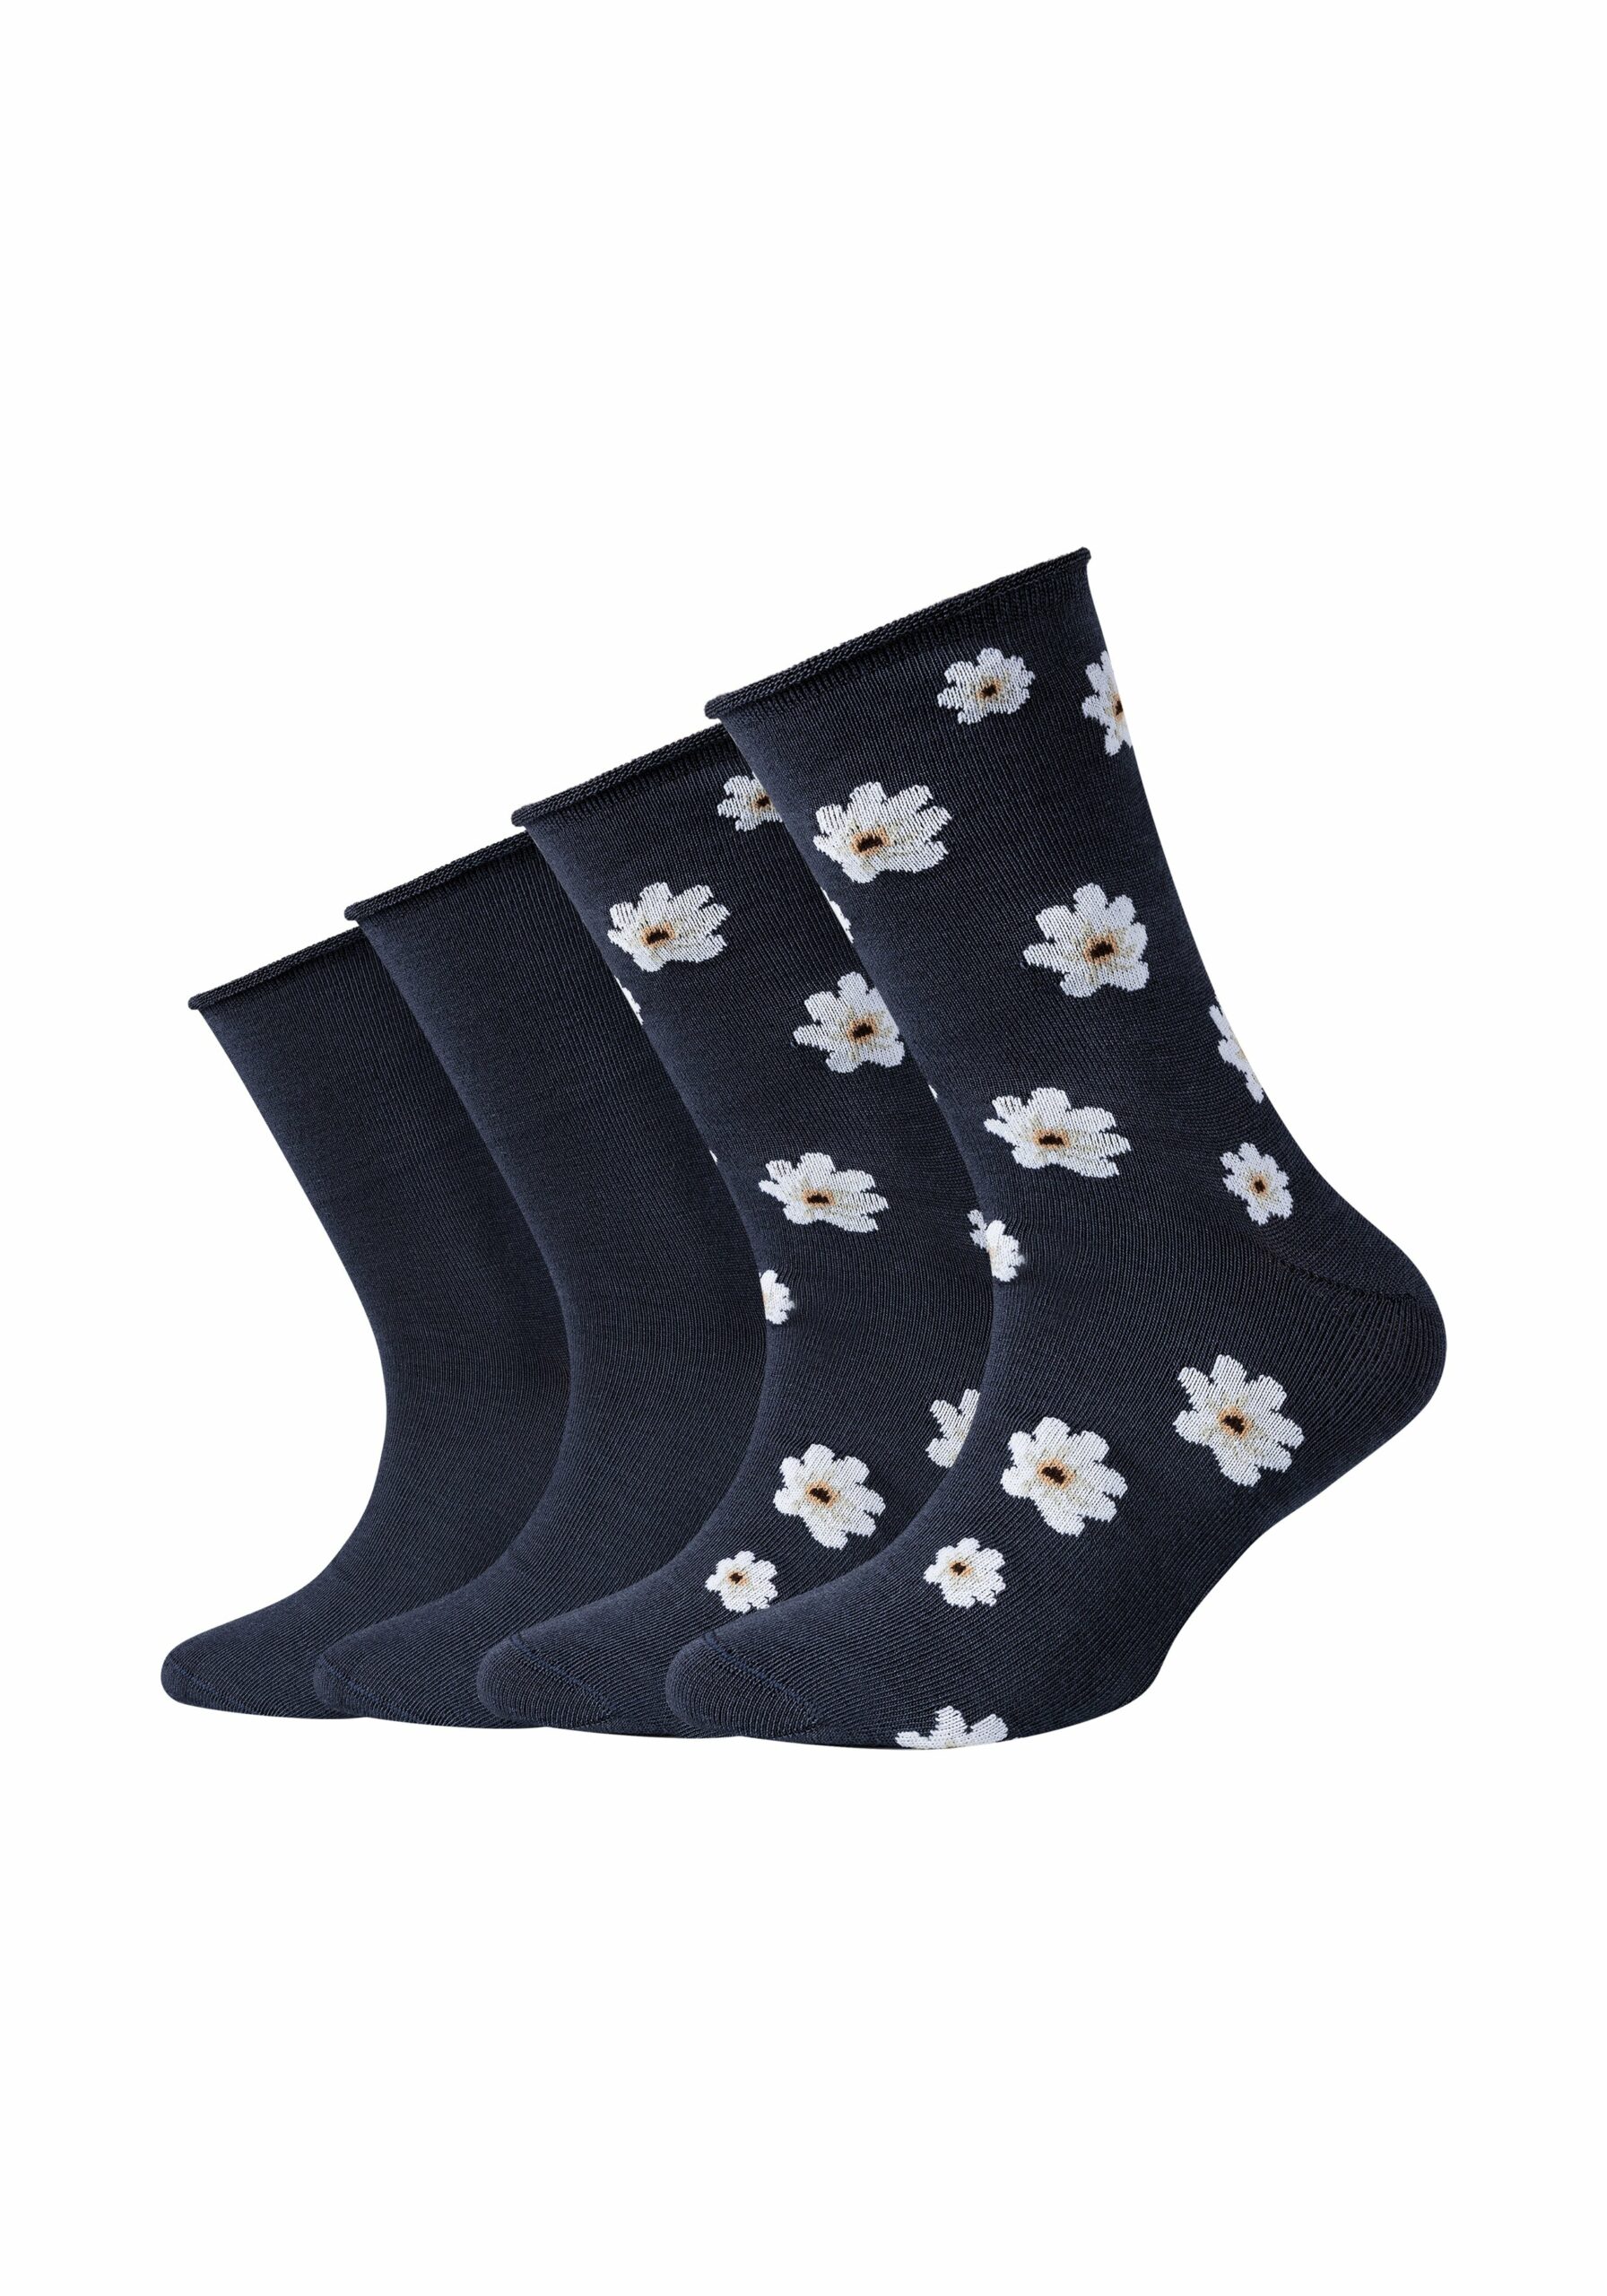 s.Oliver Kinder Socken Silky Touch Flower 4er Pack blue kaufen bei